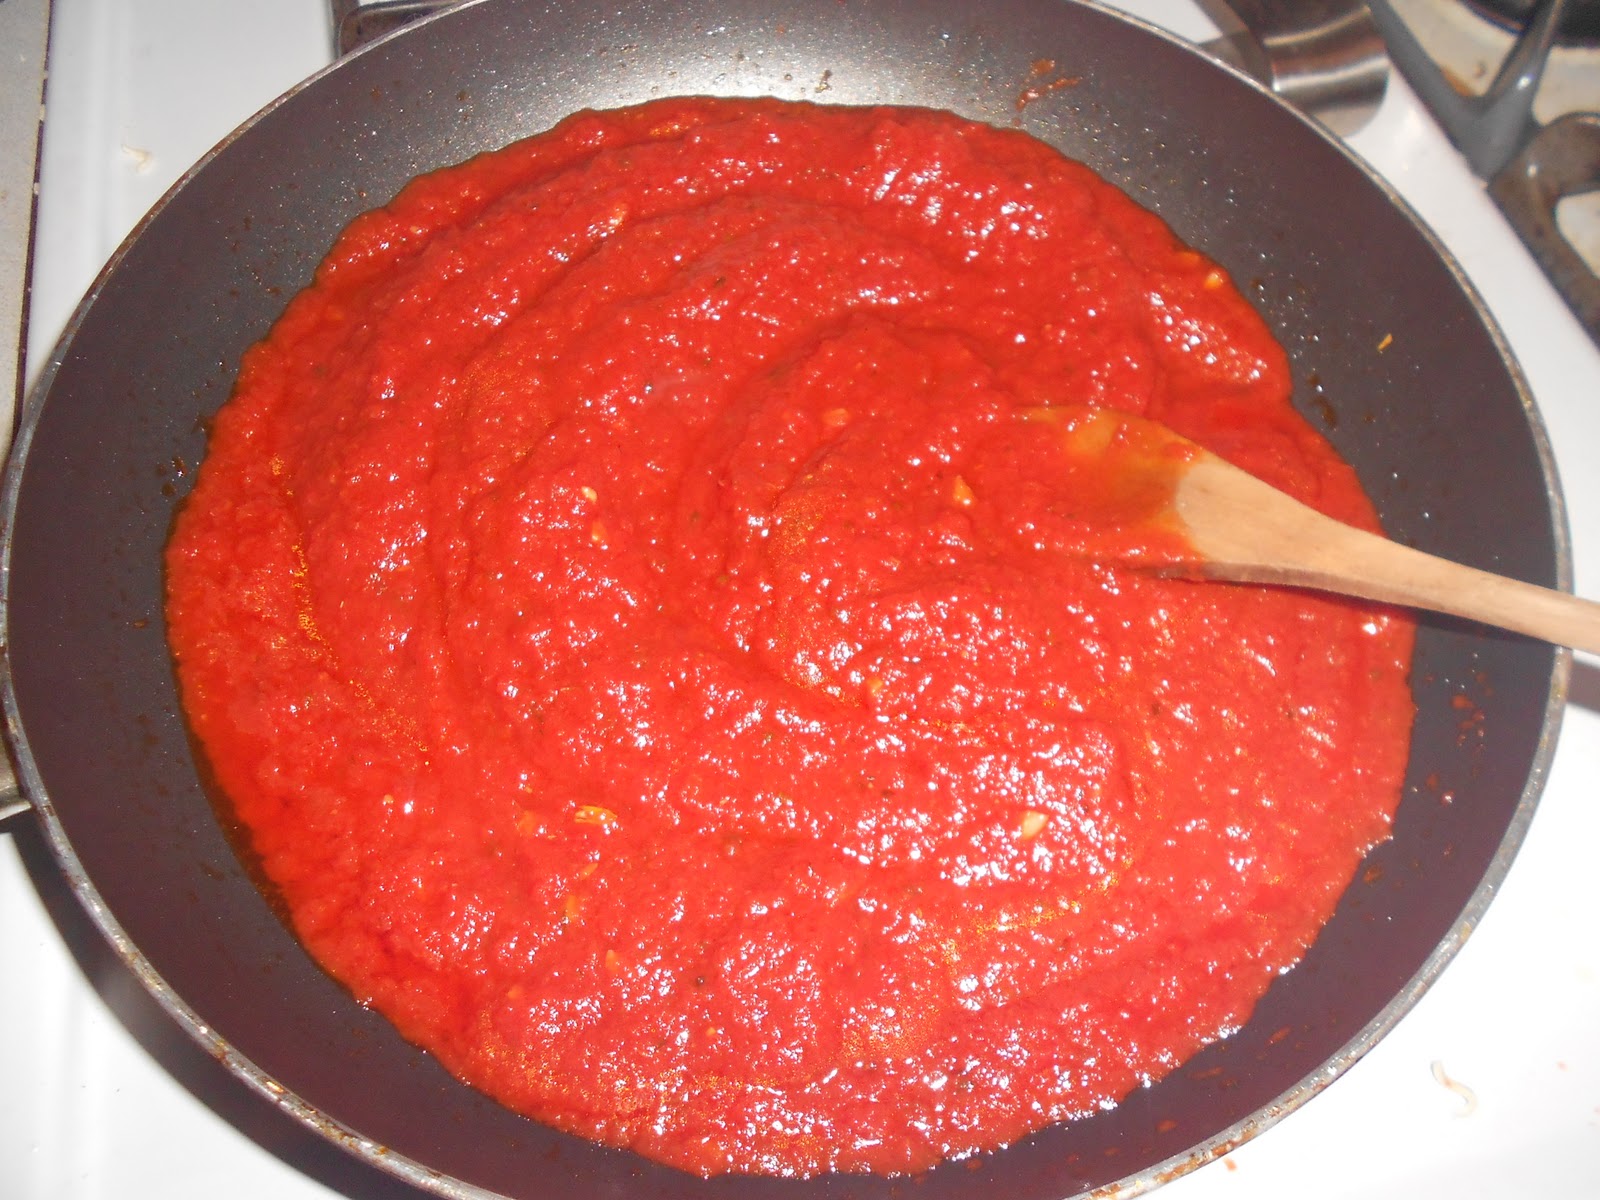 pasta clipart tomato sauce